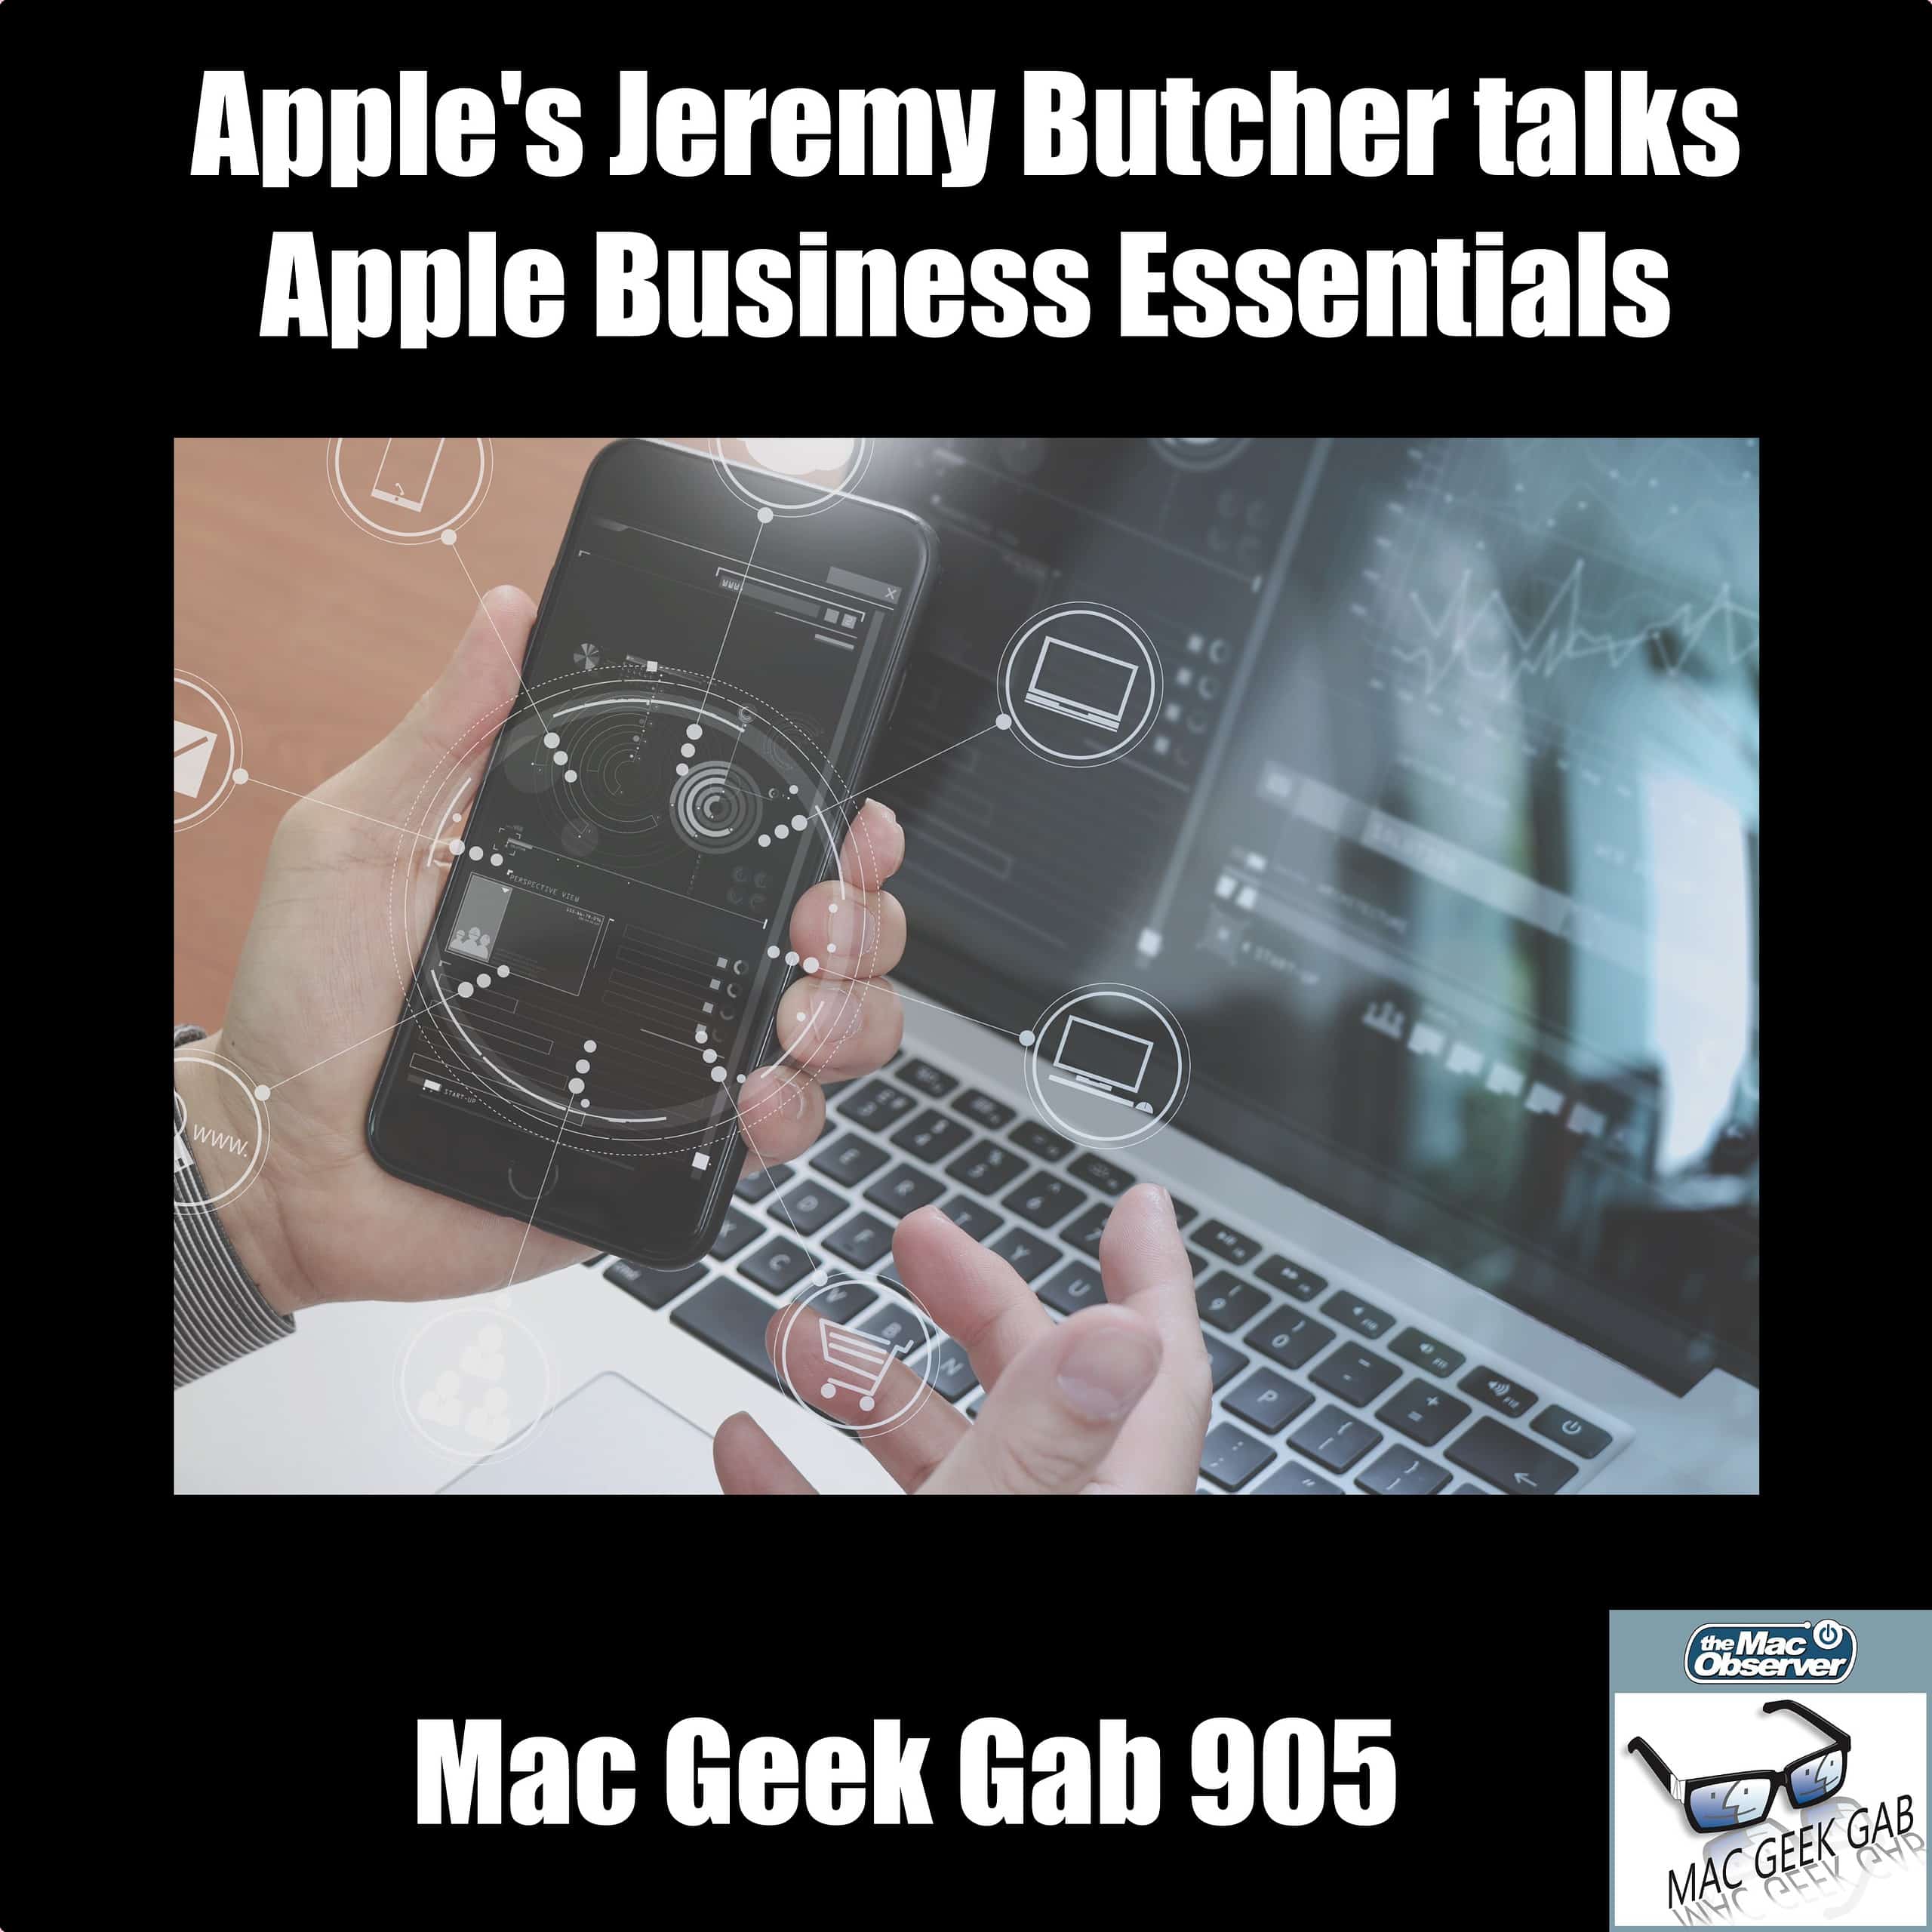 Apple’s Jeremy Butcher talks Apple Business Essentials – Mac Geek Gab 905